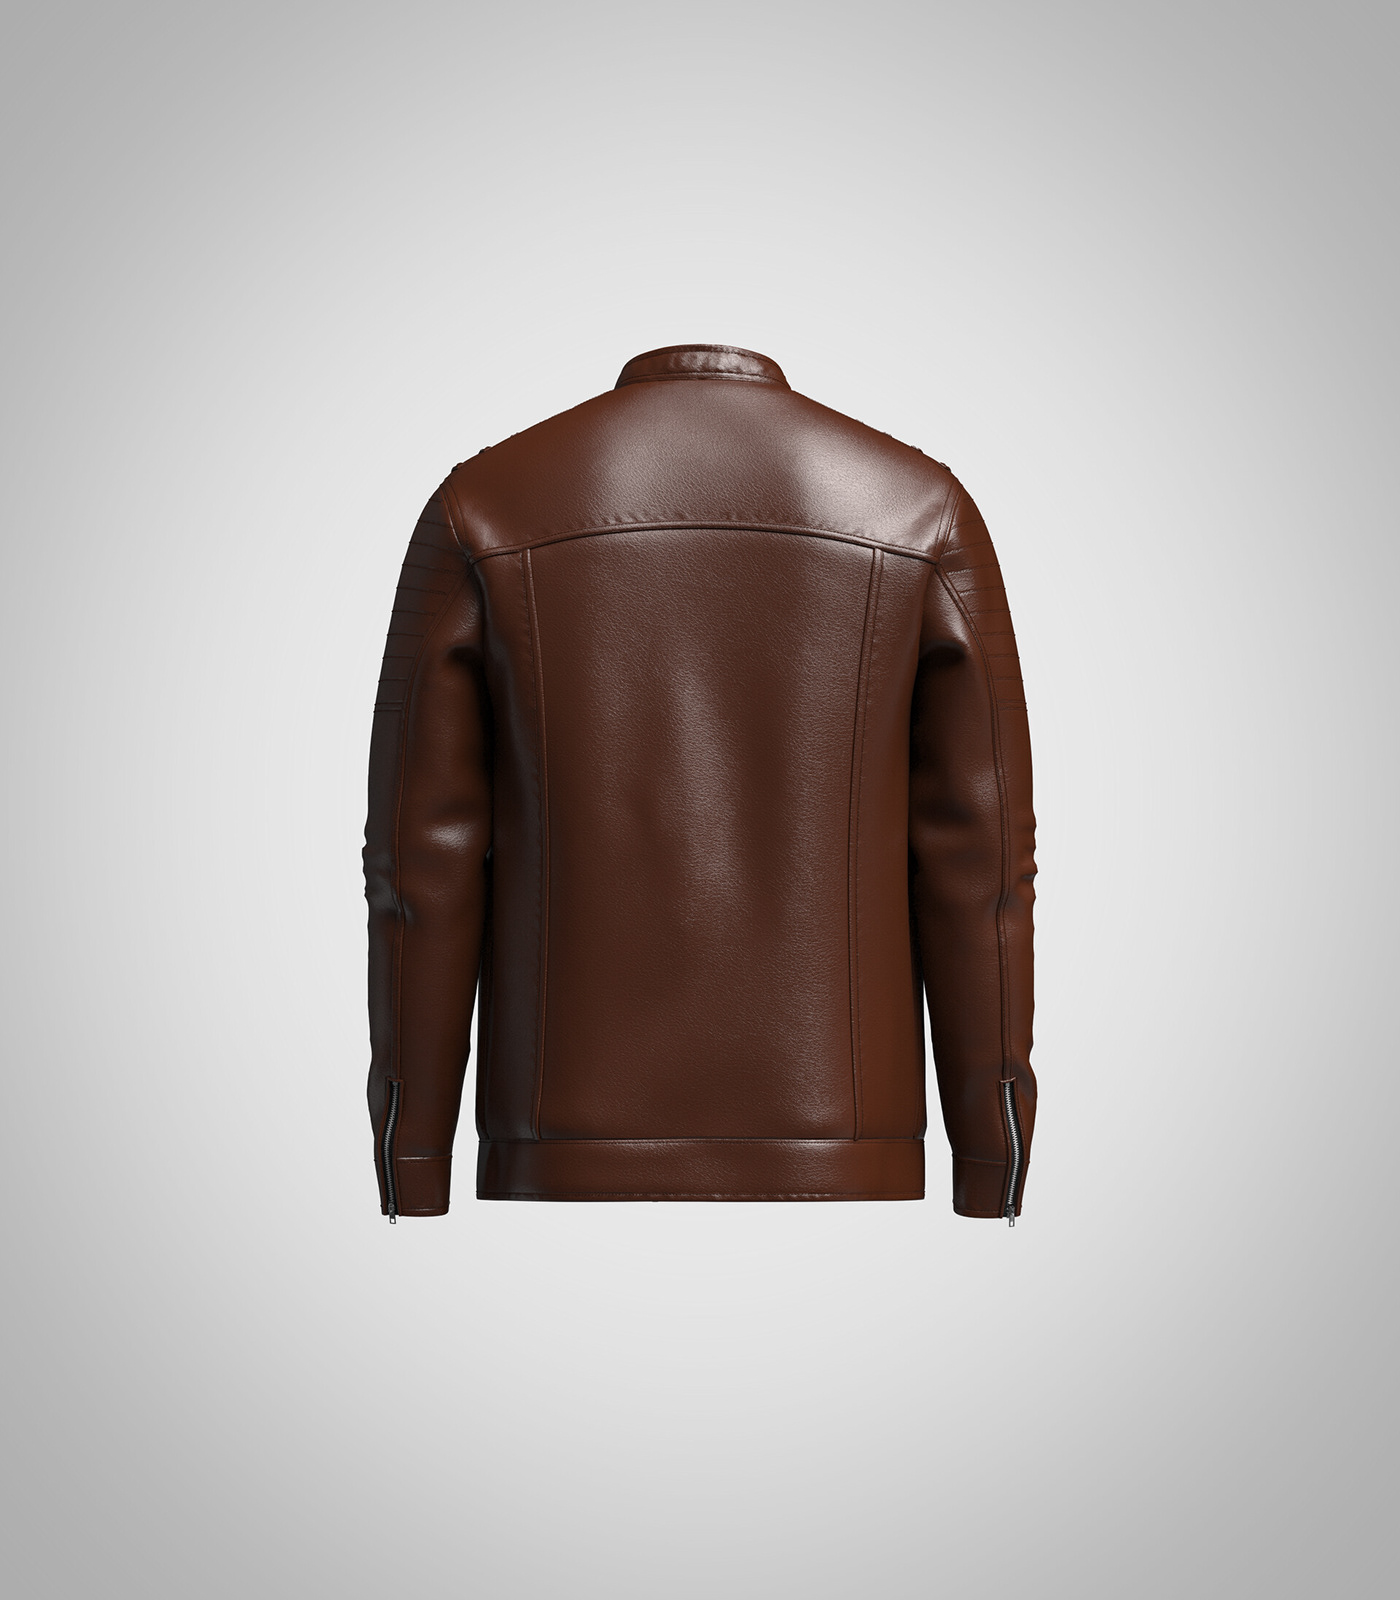 Character design  Clothing outfit design Style Clo3d dress 3d leather jacket 3D mondeling 3d wear mavelous designer